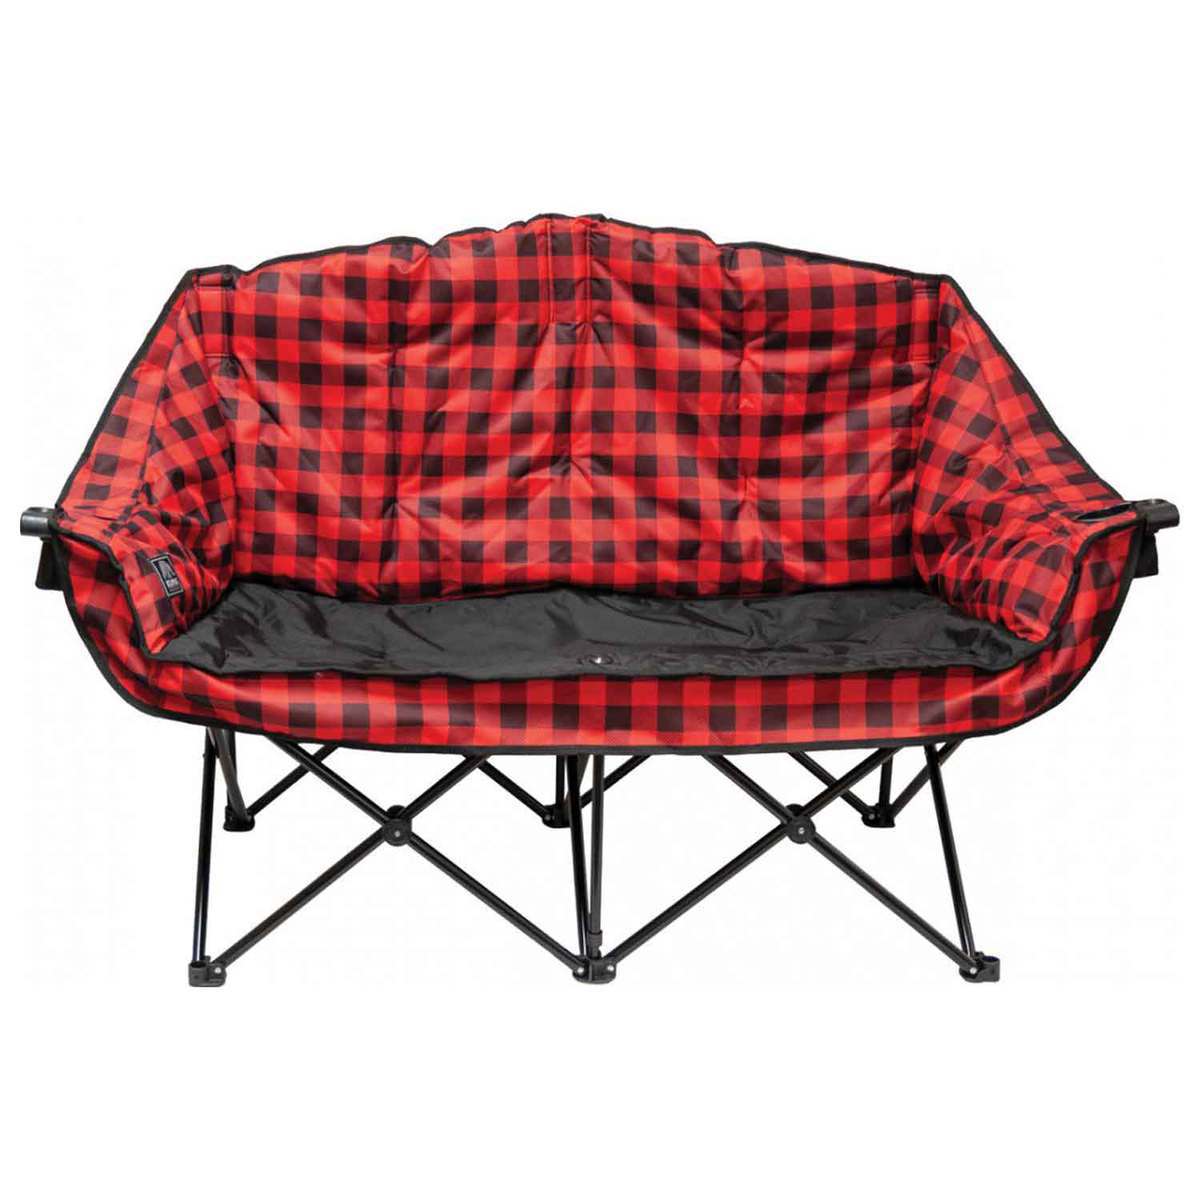 Kuma Outdoor Gear Bear Buddy Double Camp Chair Red/Black